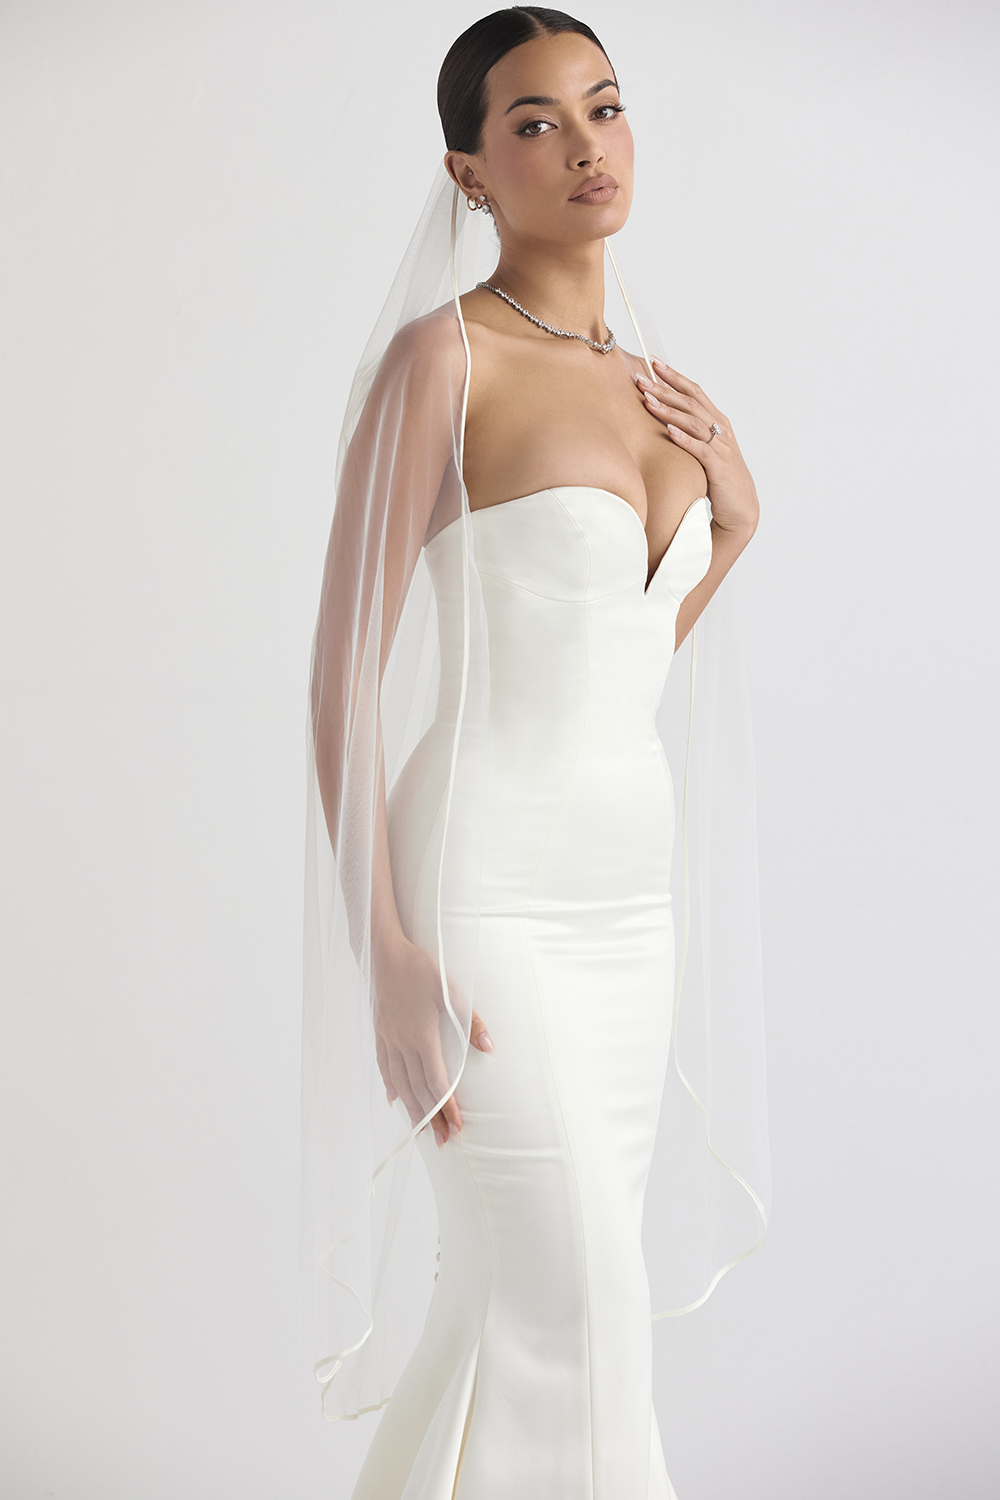 Clothing : Bridal : 'Simone' White Single Layer Soft Tulle Veil